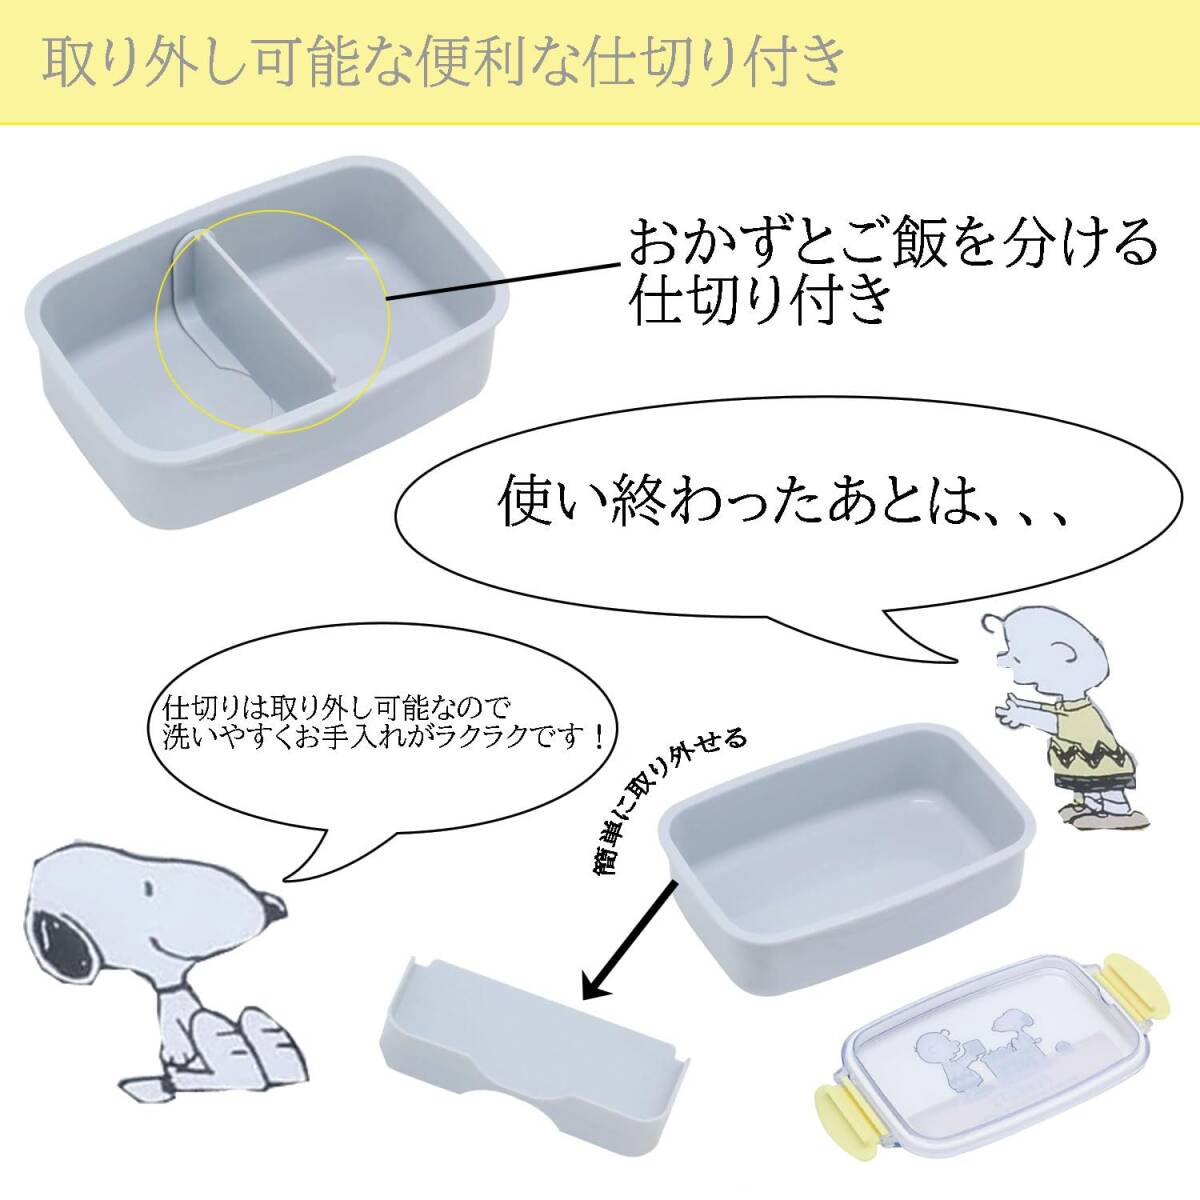 OSK(オーエスケー) 弁当箱 スヌーピー ランチボックス 仕切り付 イエロー グレー 500ml 日本製 食洗機 電子レンジ対応 抗菌 ロック_画像3